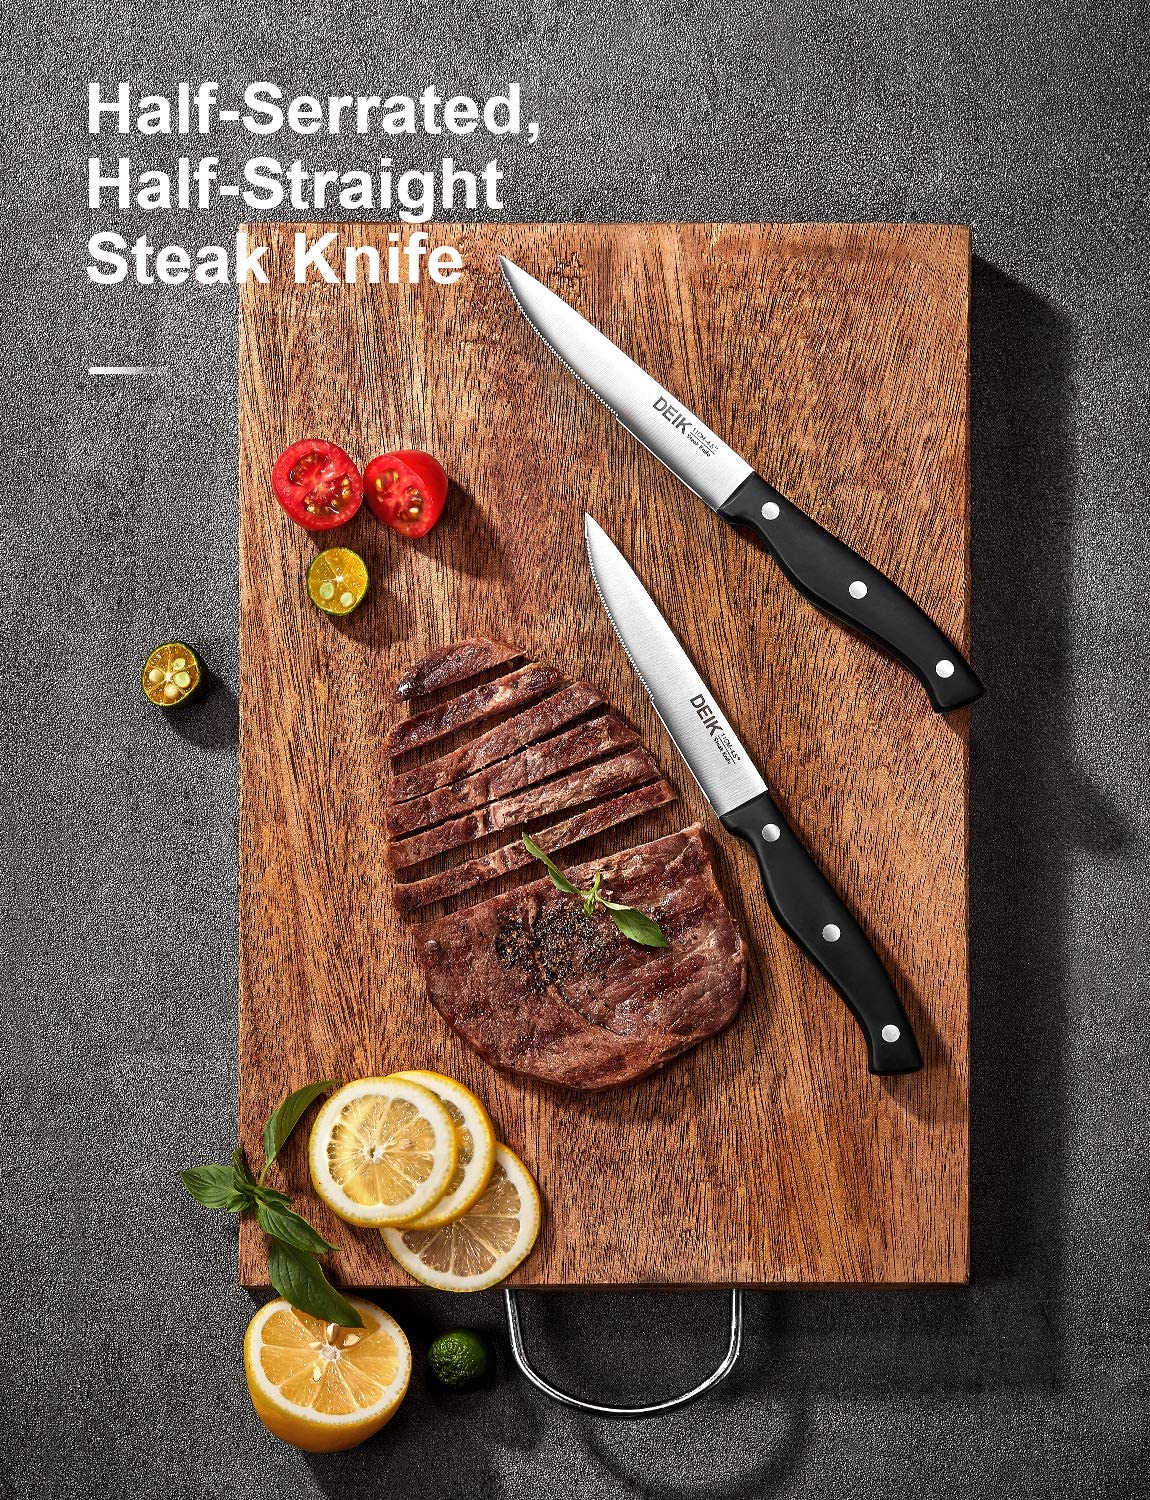 Deik | Knife Set, Upgraded Stainless Steel Kitchen Knife Set 15PCS for Anti-rusting, Super Sharp Carving Knife Set with Ergonomic Handle in Hardwood Block, Half-serrated, Half-Straight